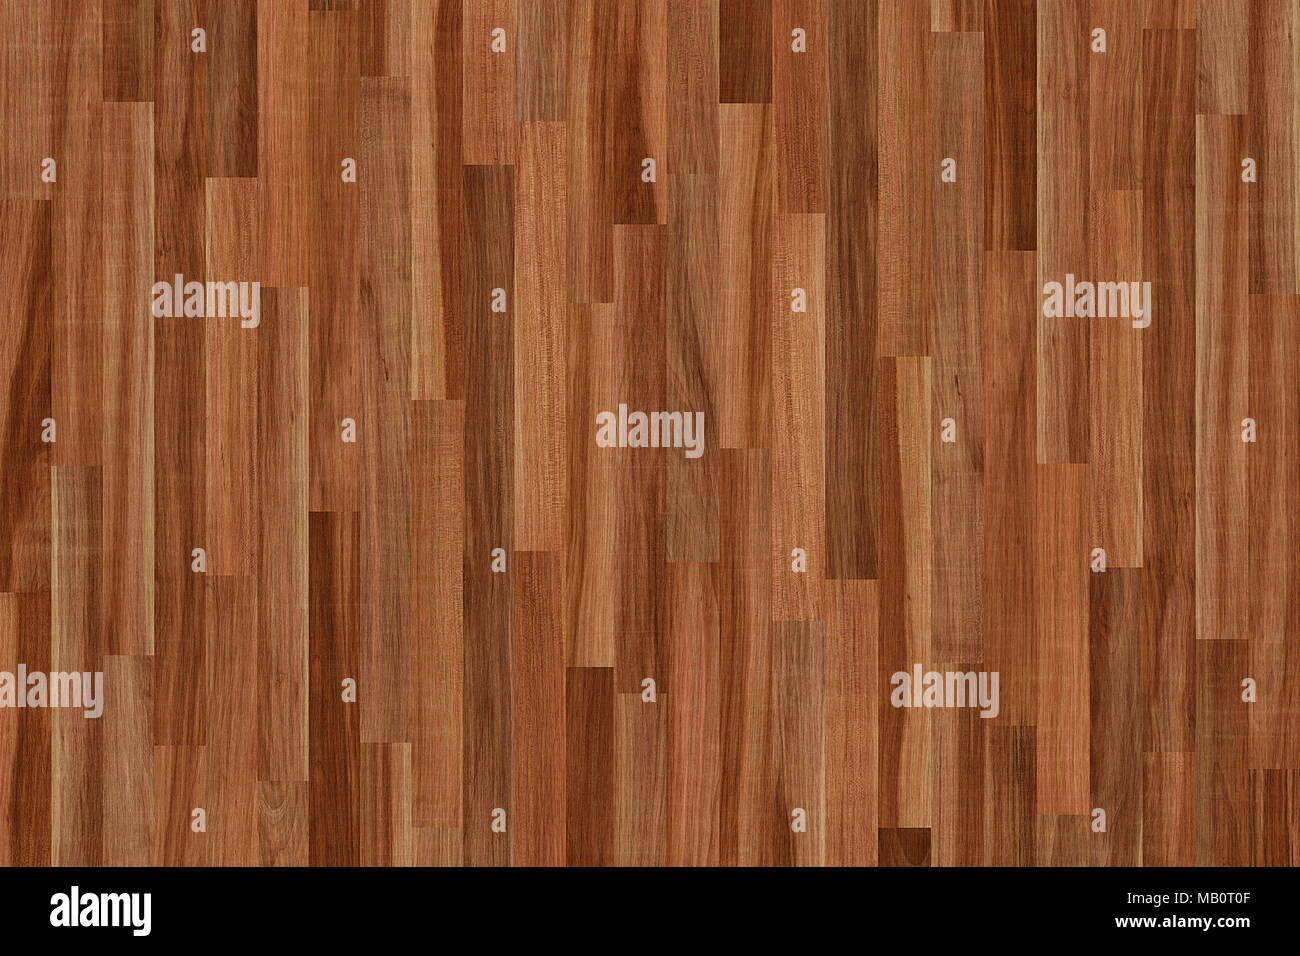 wooden parquet, parkett. wood parquet texture background Stock Photo